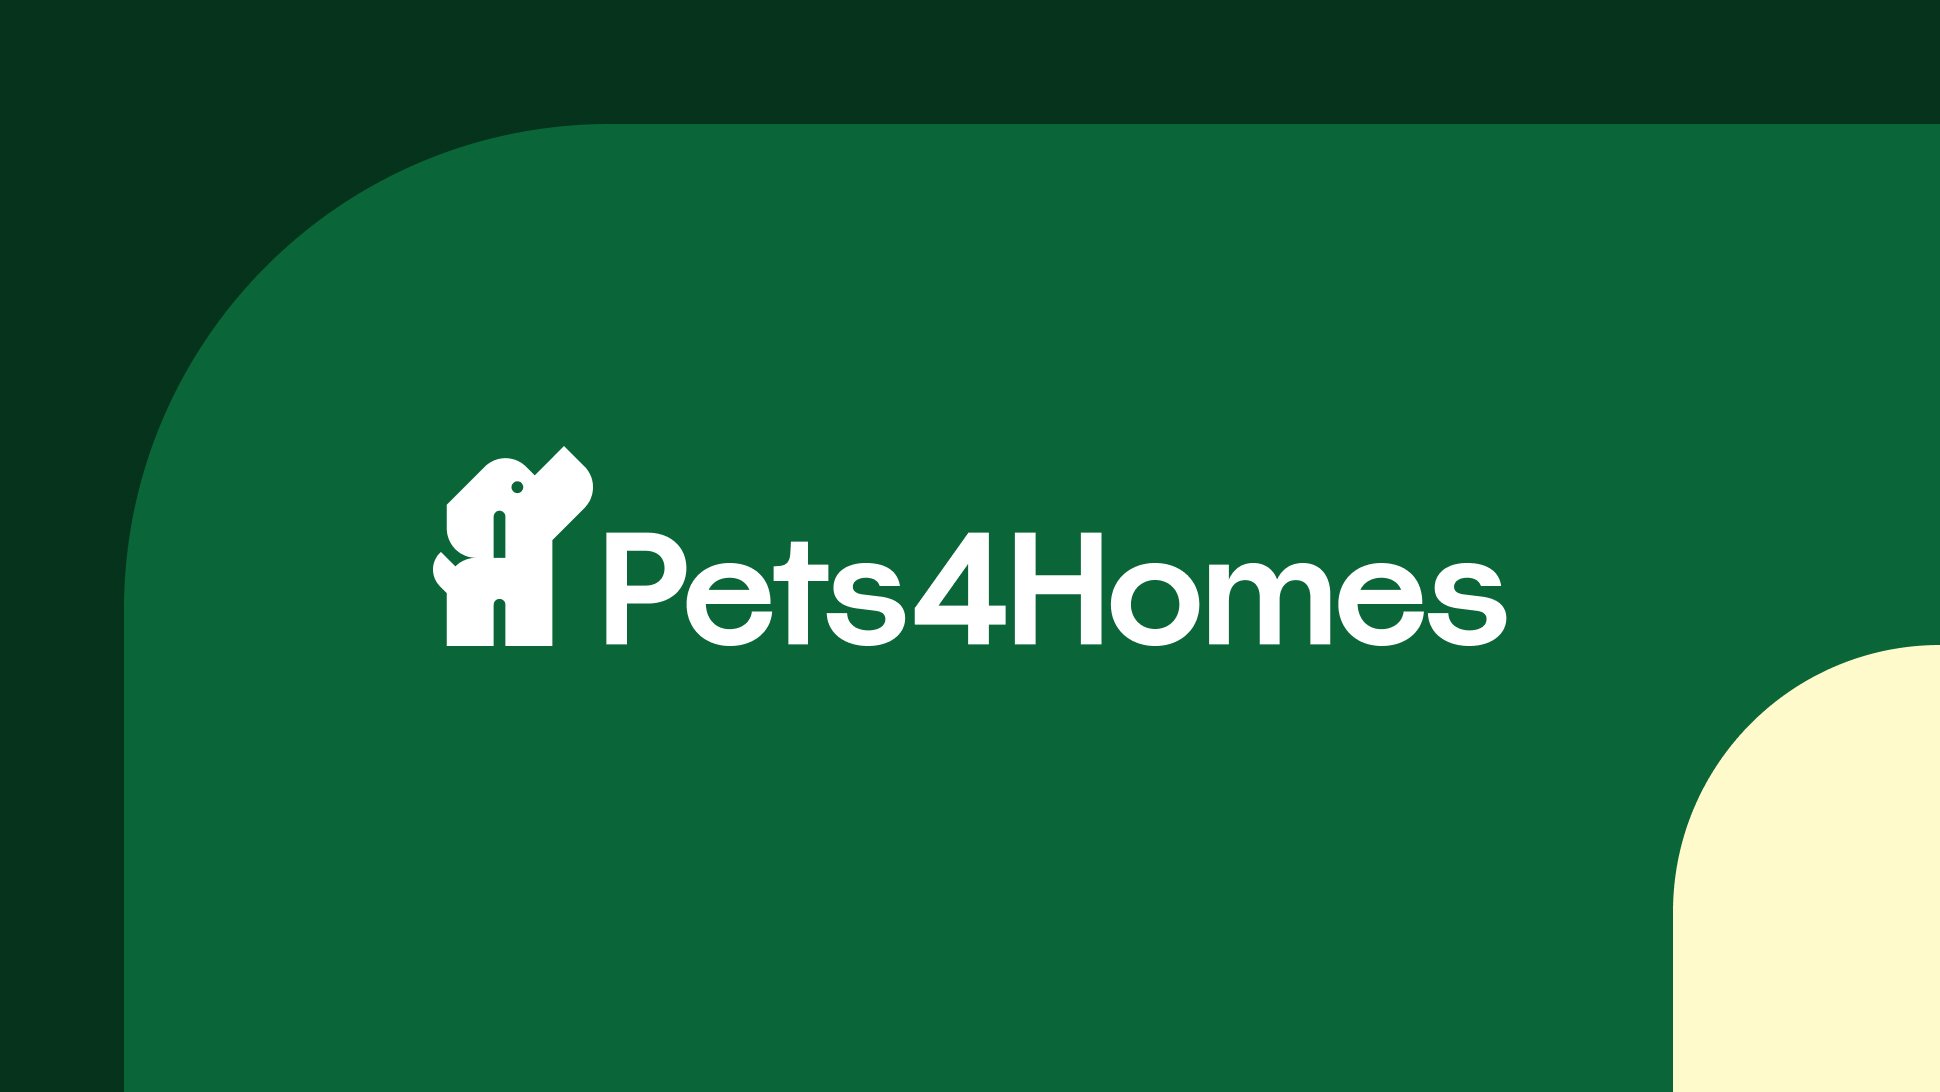 www.pets4homes.co.uk